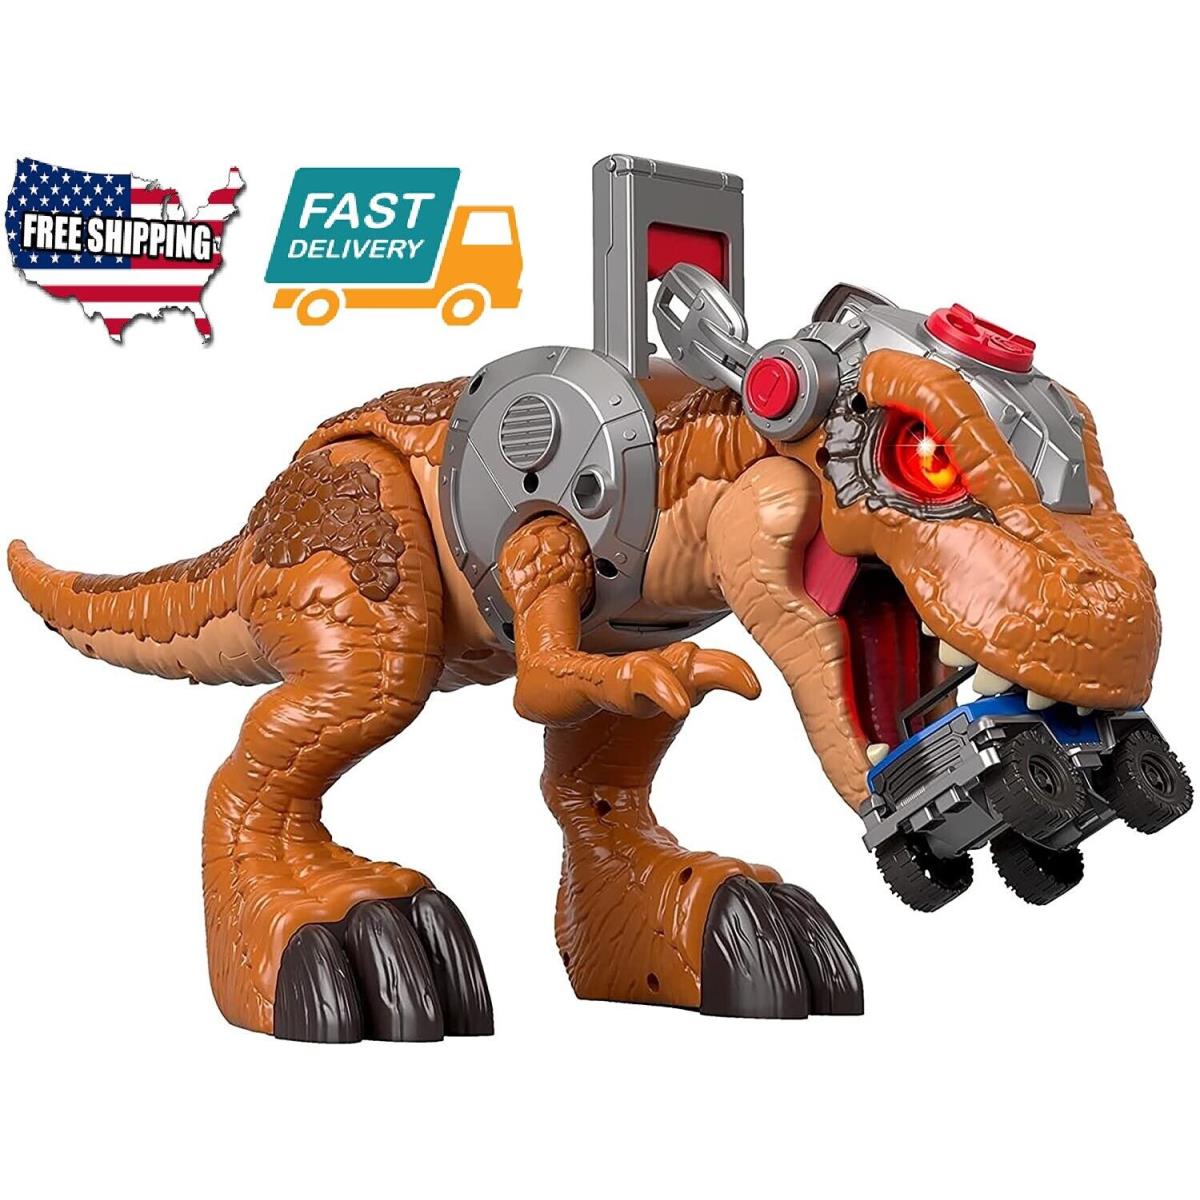 Home Kids Toy Game Action Figure Imaginext Jurassic World Jurassic Rex Dinosaur